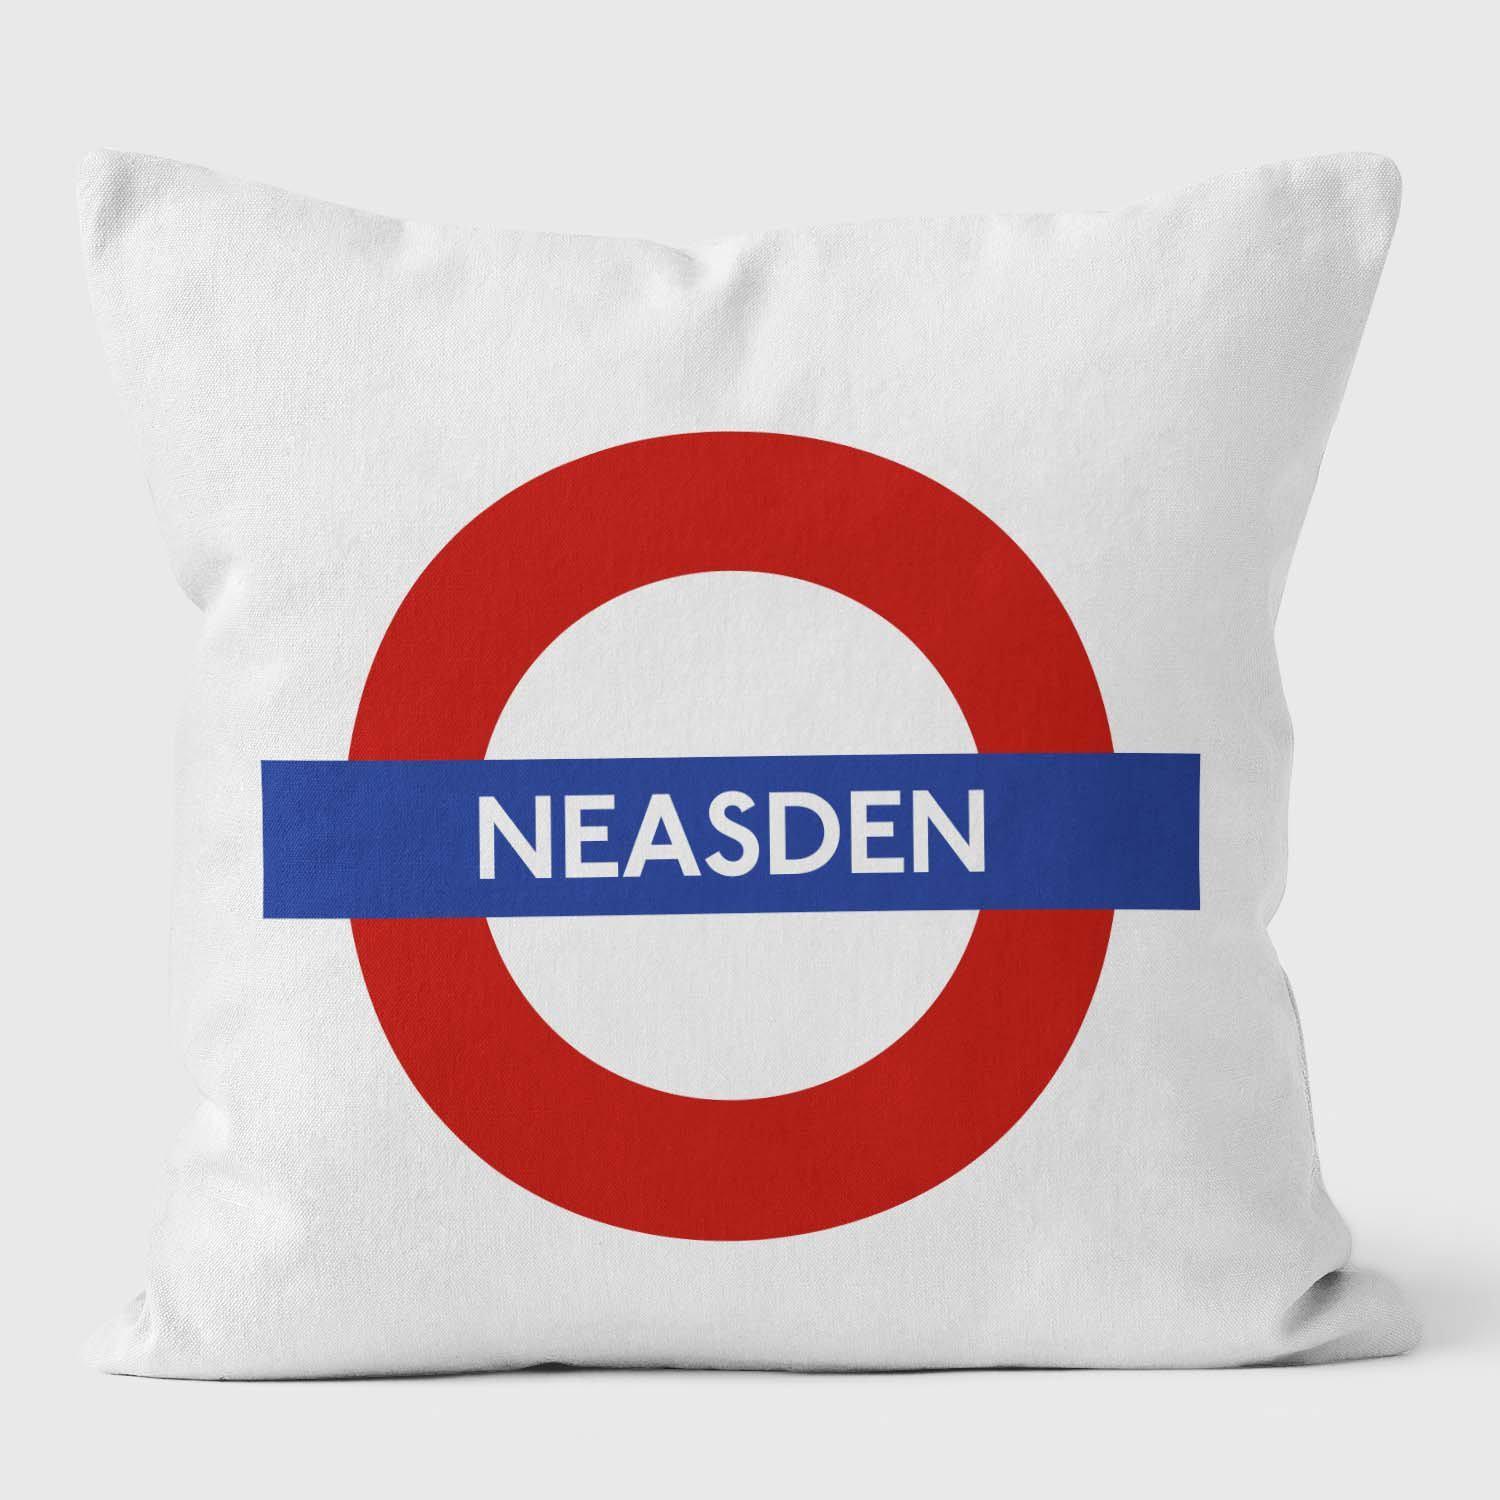 Neasden London Underground Tube Station Roundel Cushion - Handmade Cushions UK - WeLoveCushions